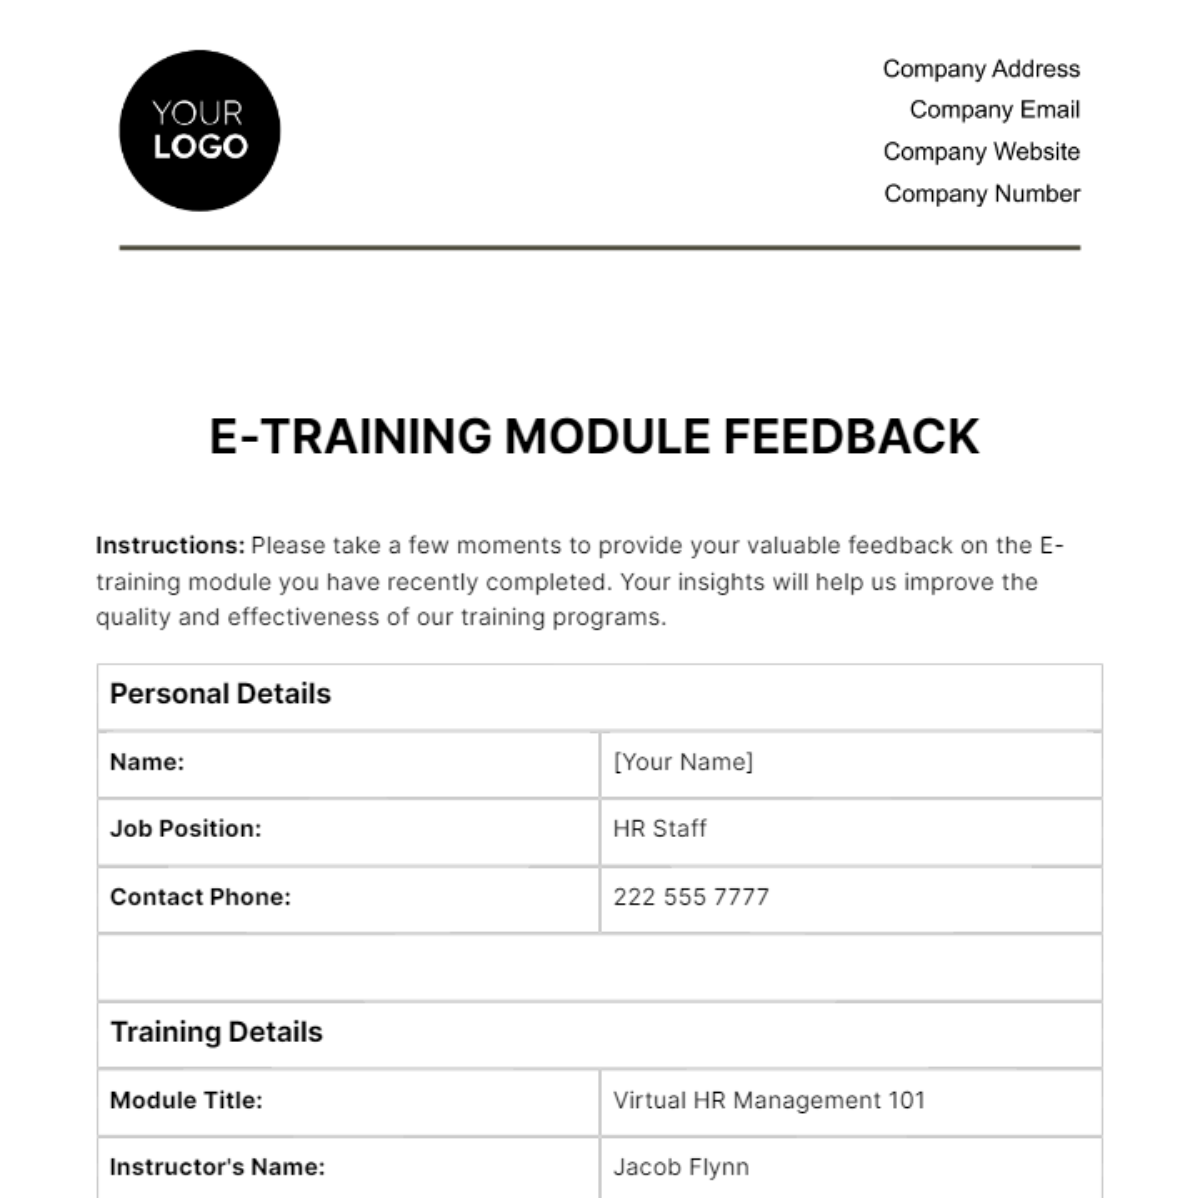 E-training Module Feedback HR Template